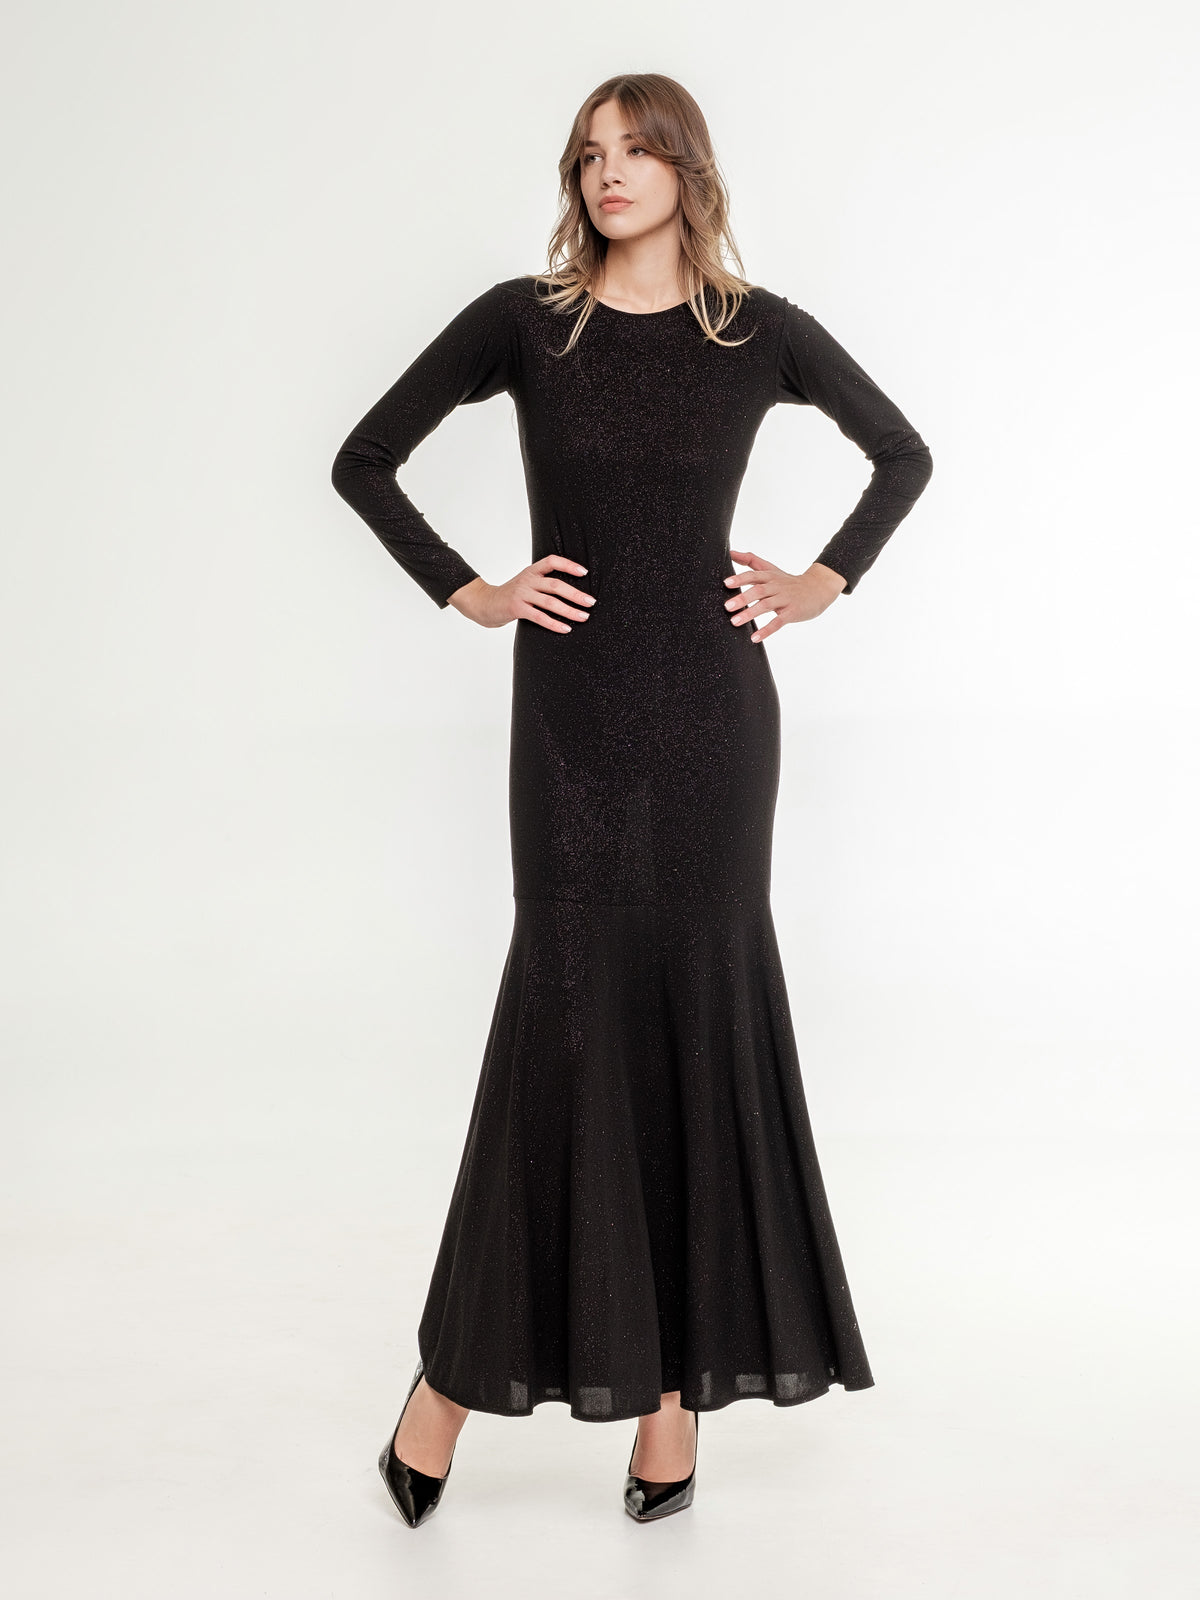 Long black shiny dress with long sleeves